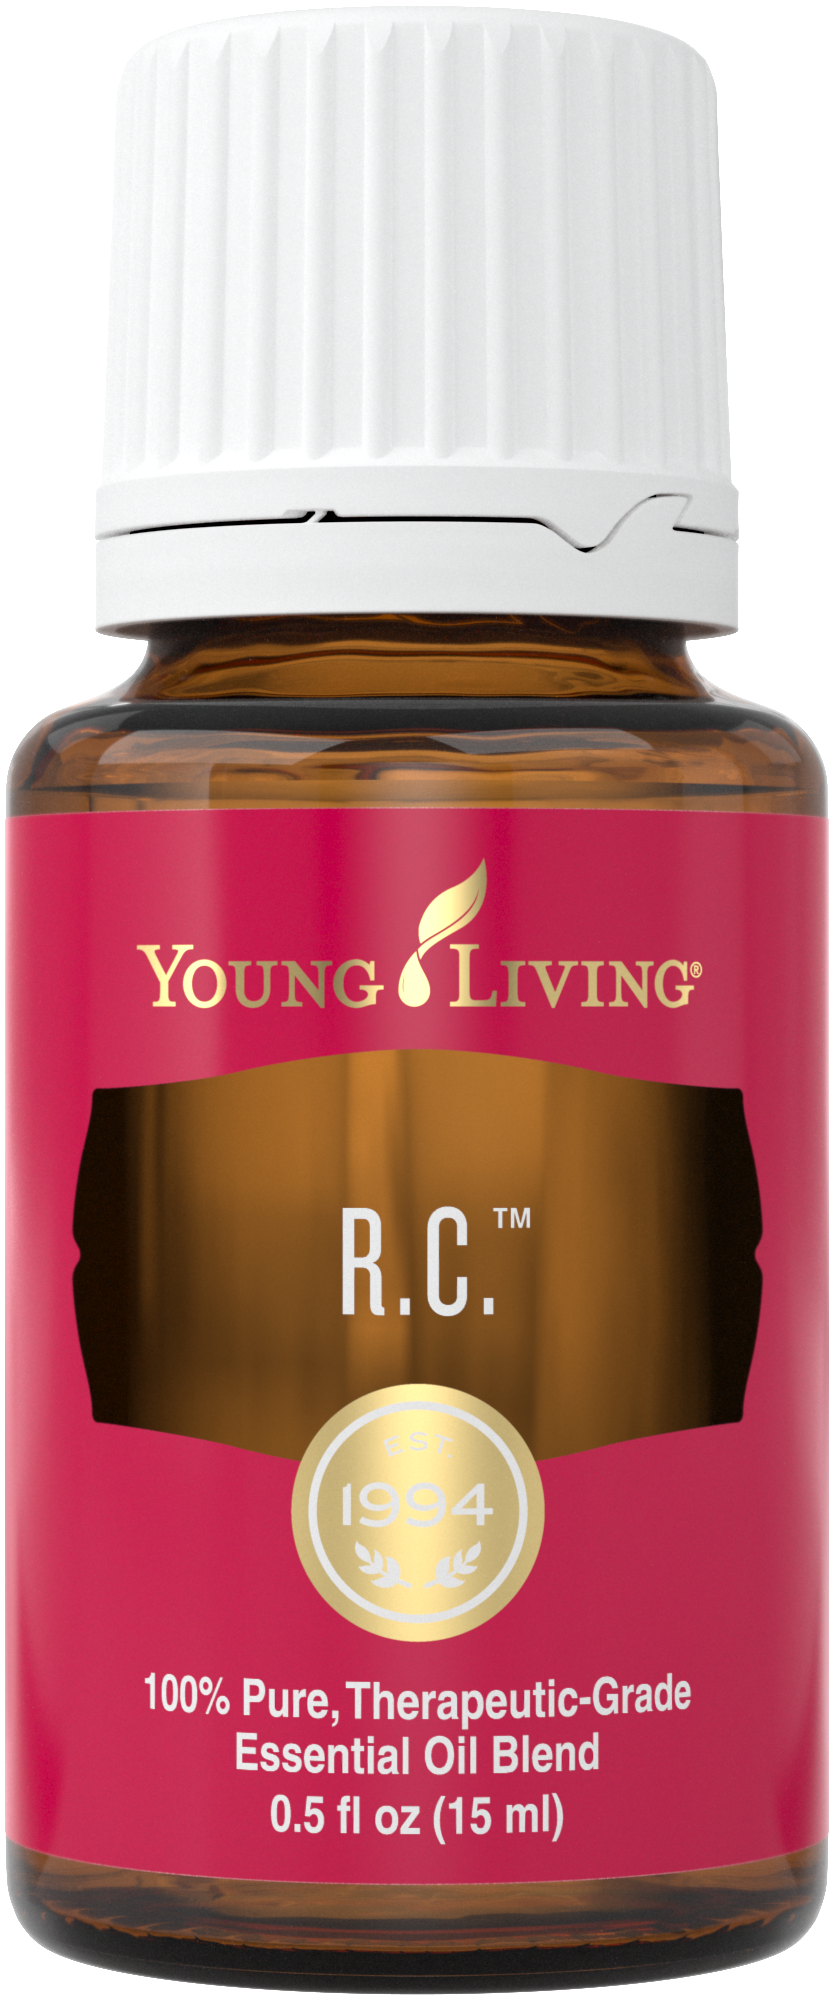 Botol minyak esensial RC Young Living